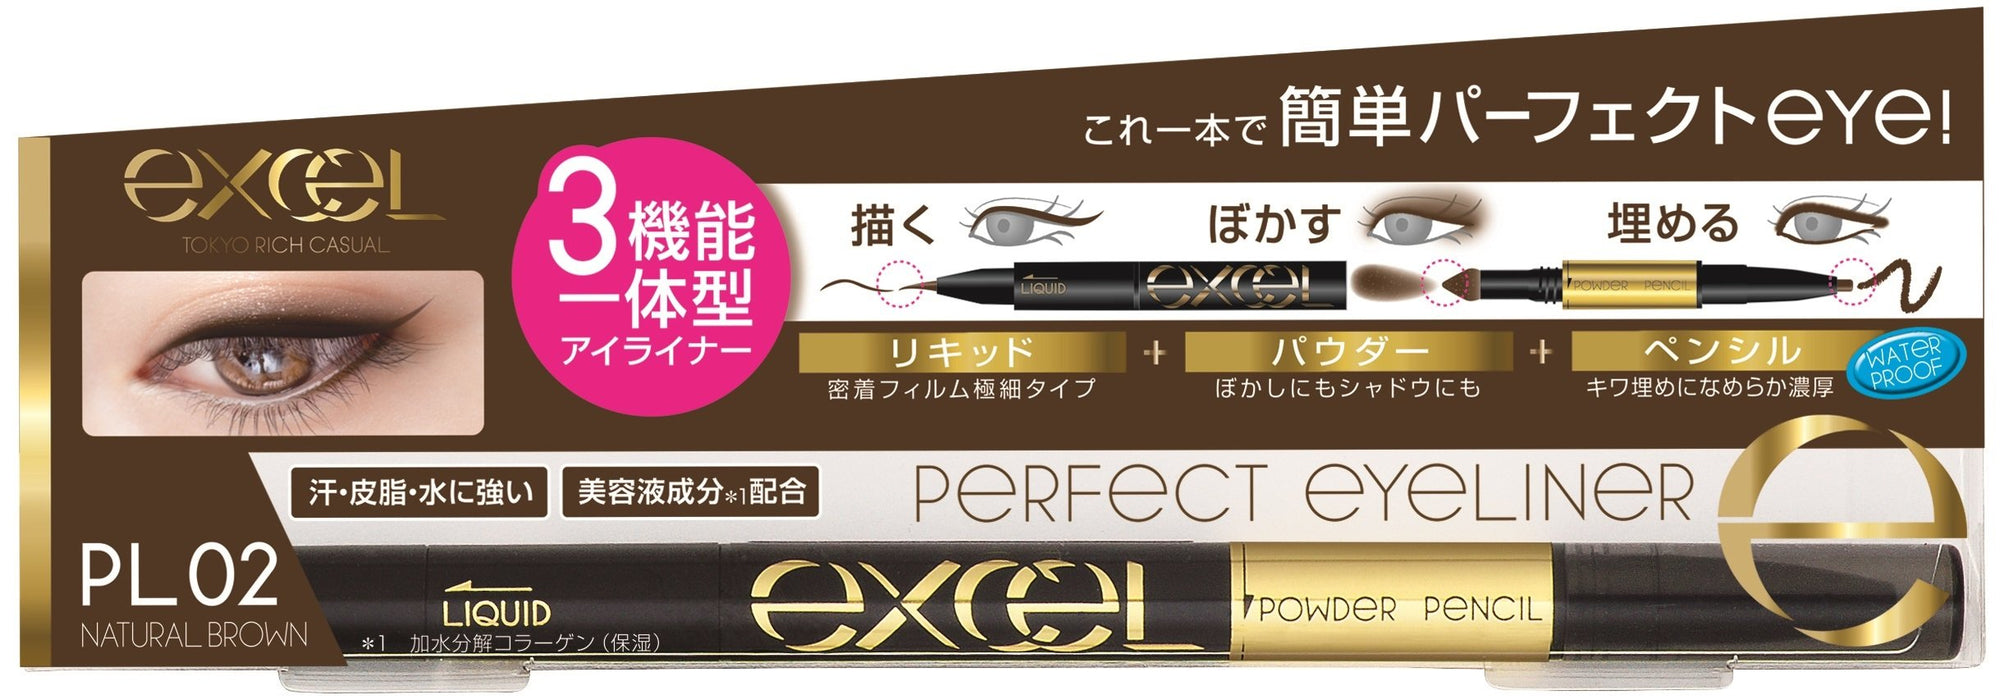 Excel Perfect Natural Brown Eyeliner Npl02 - Excel Makeup Brand